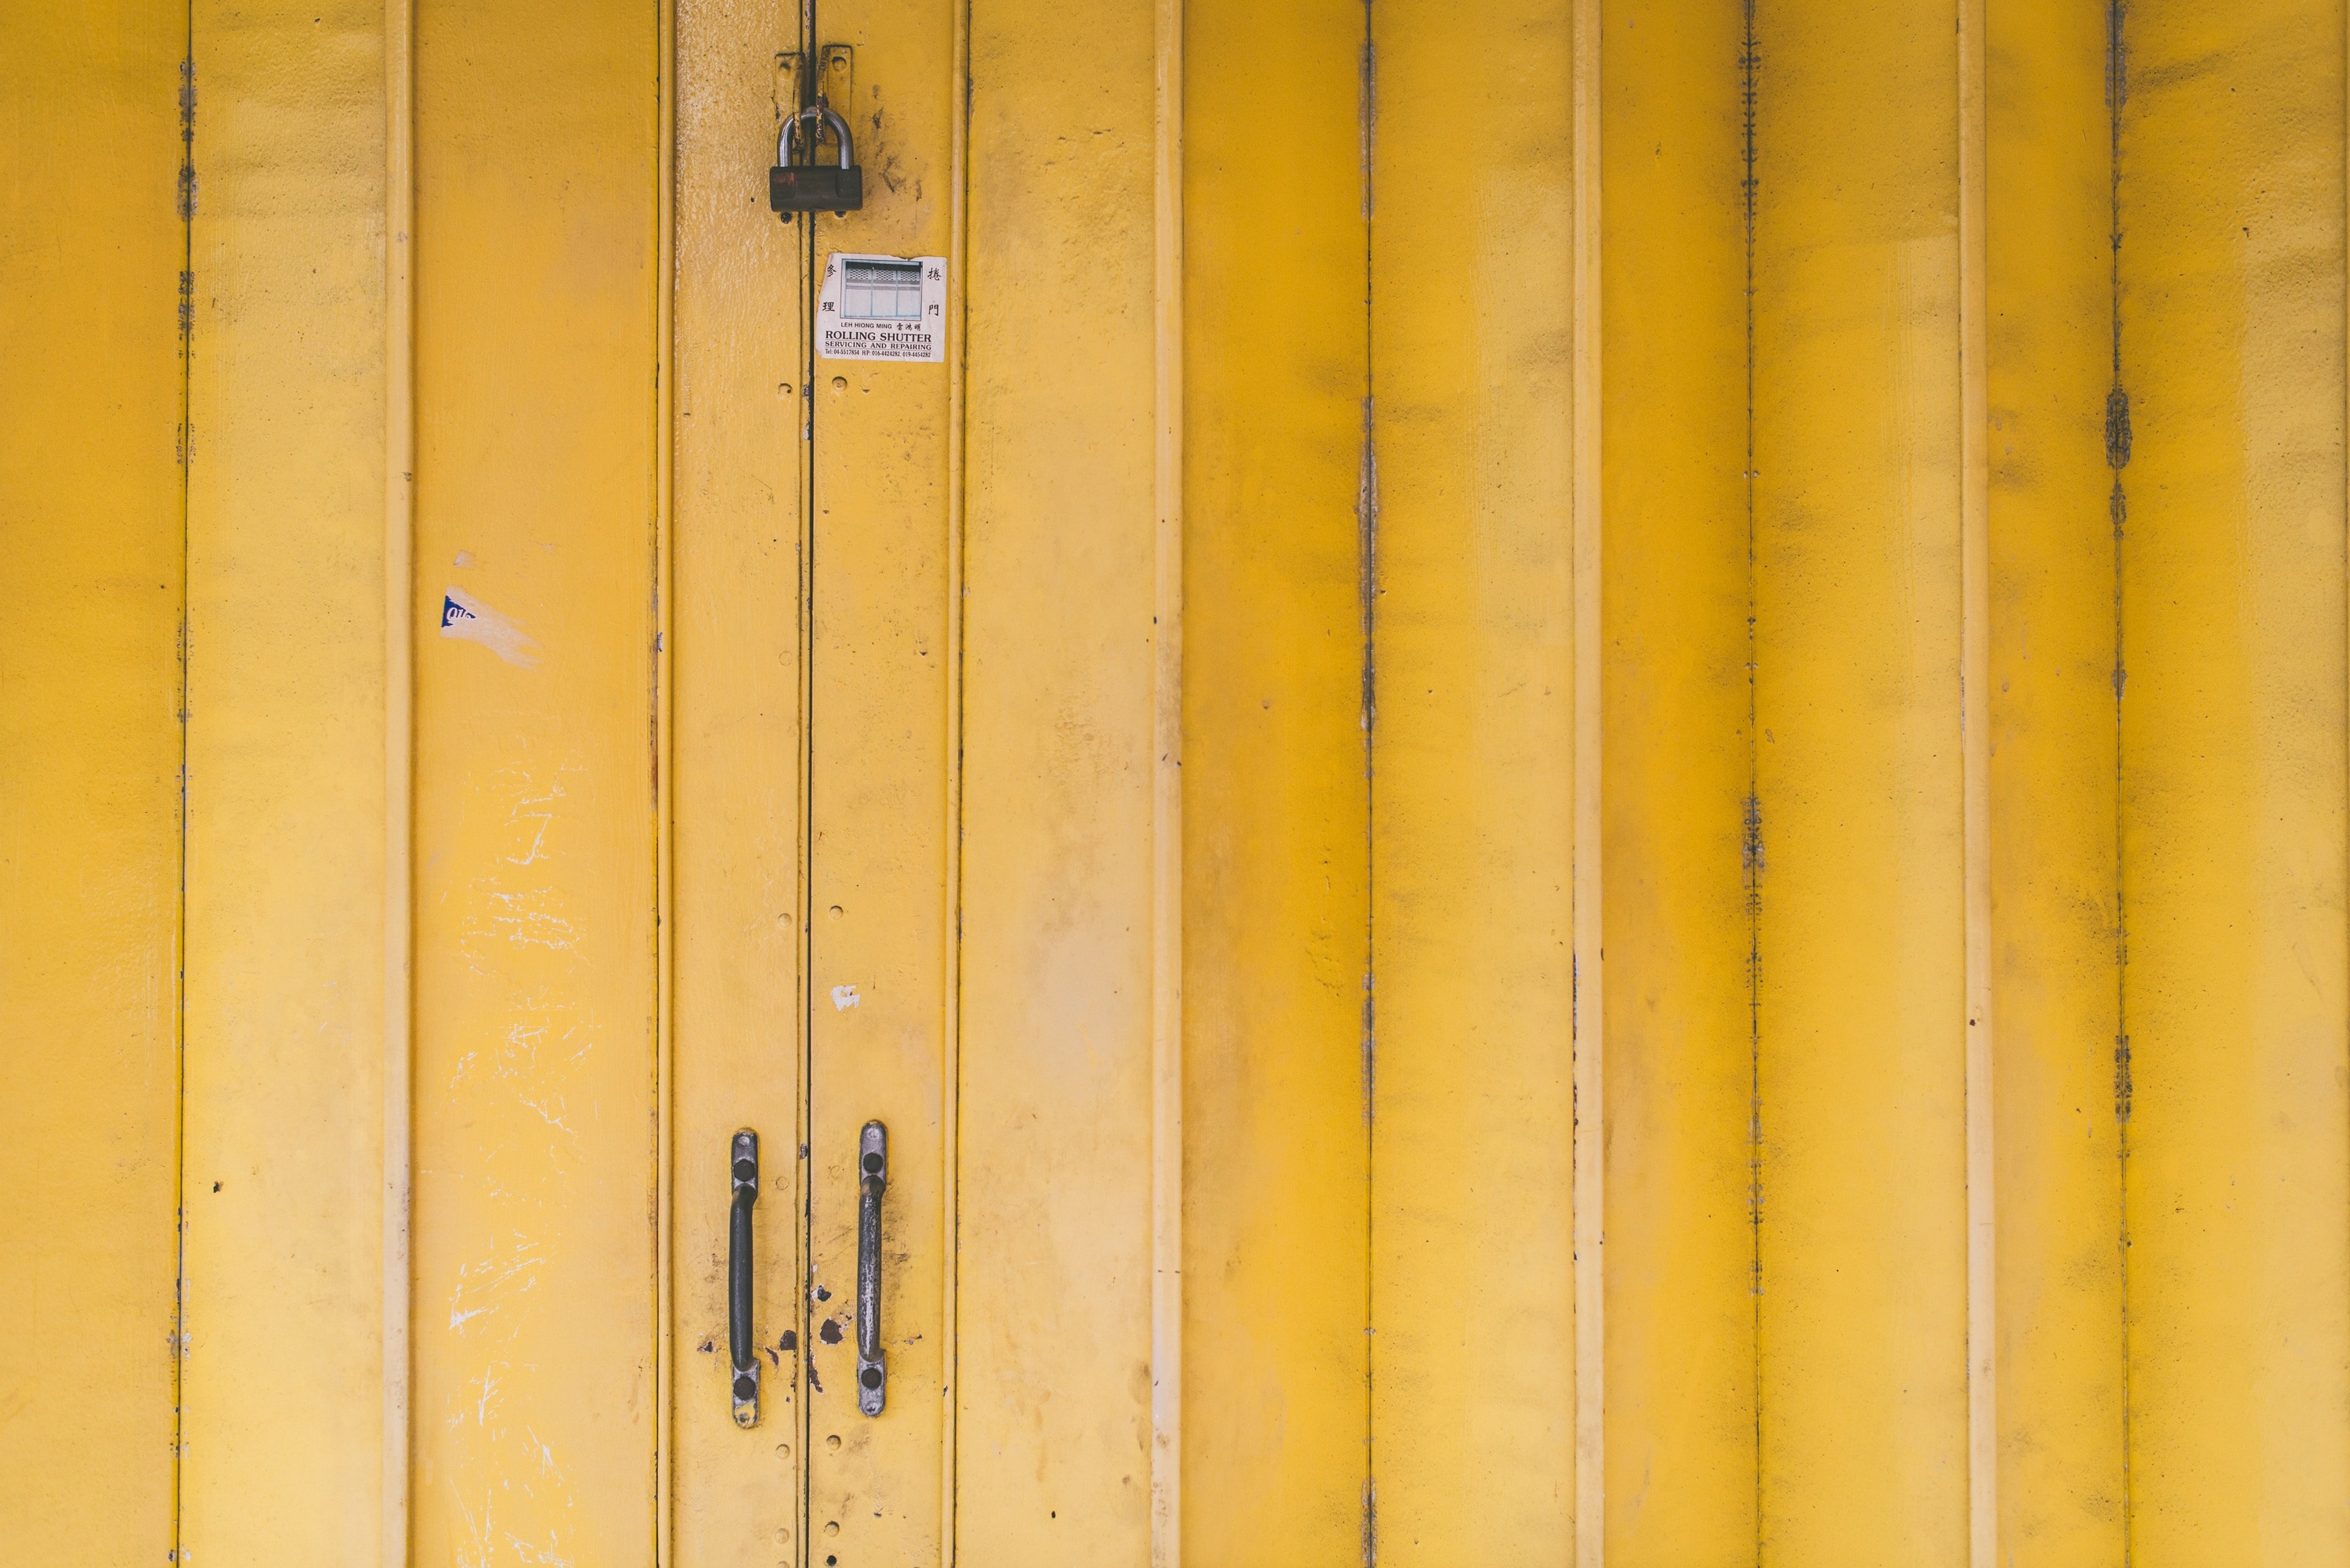 closeup view of yellow door with padlock